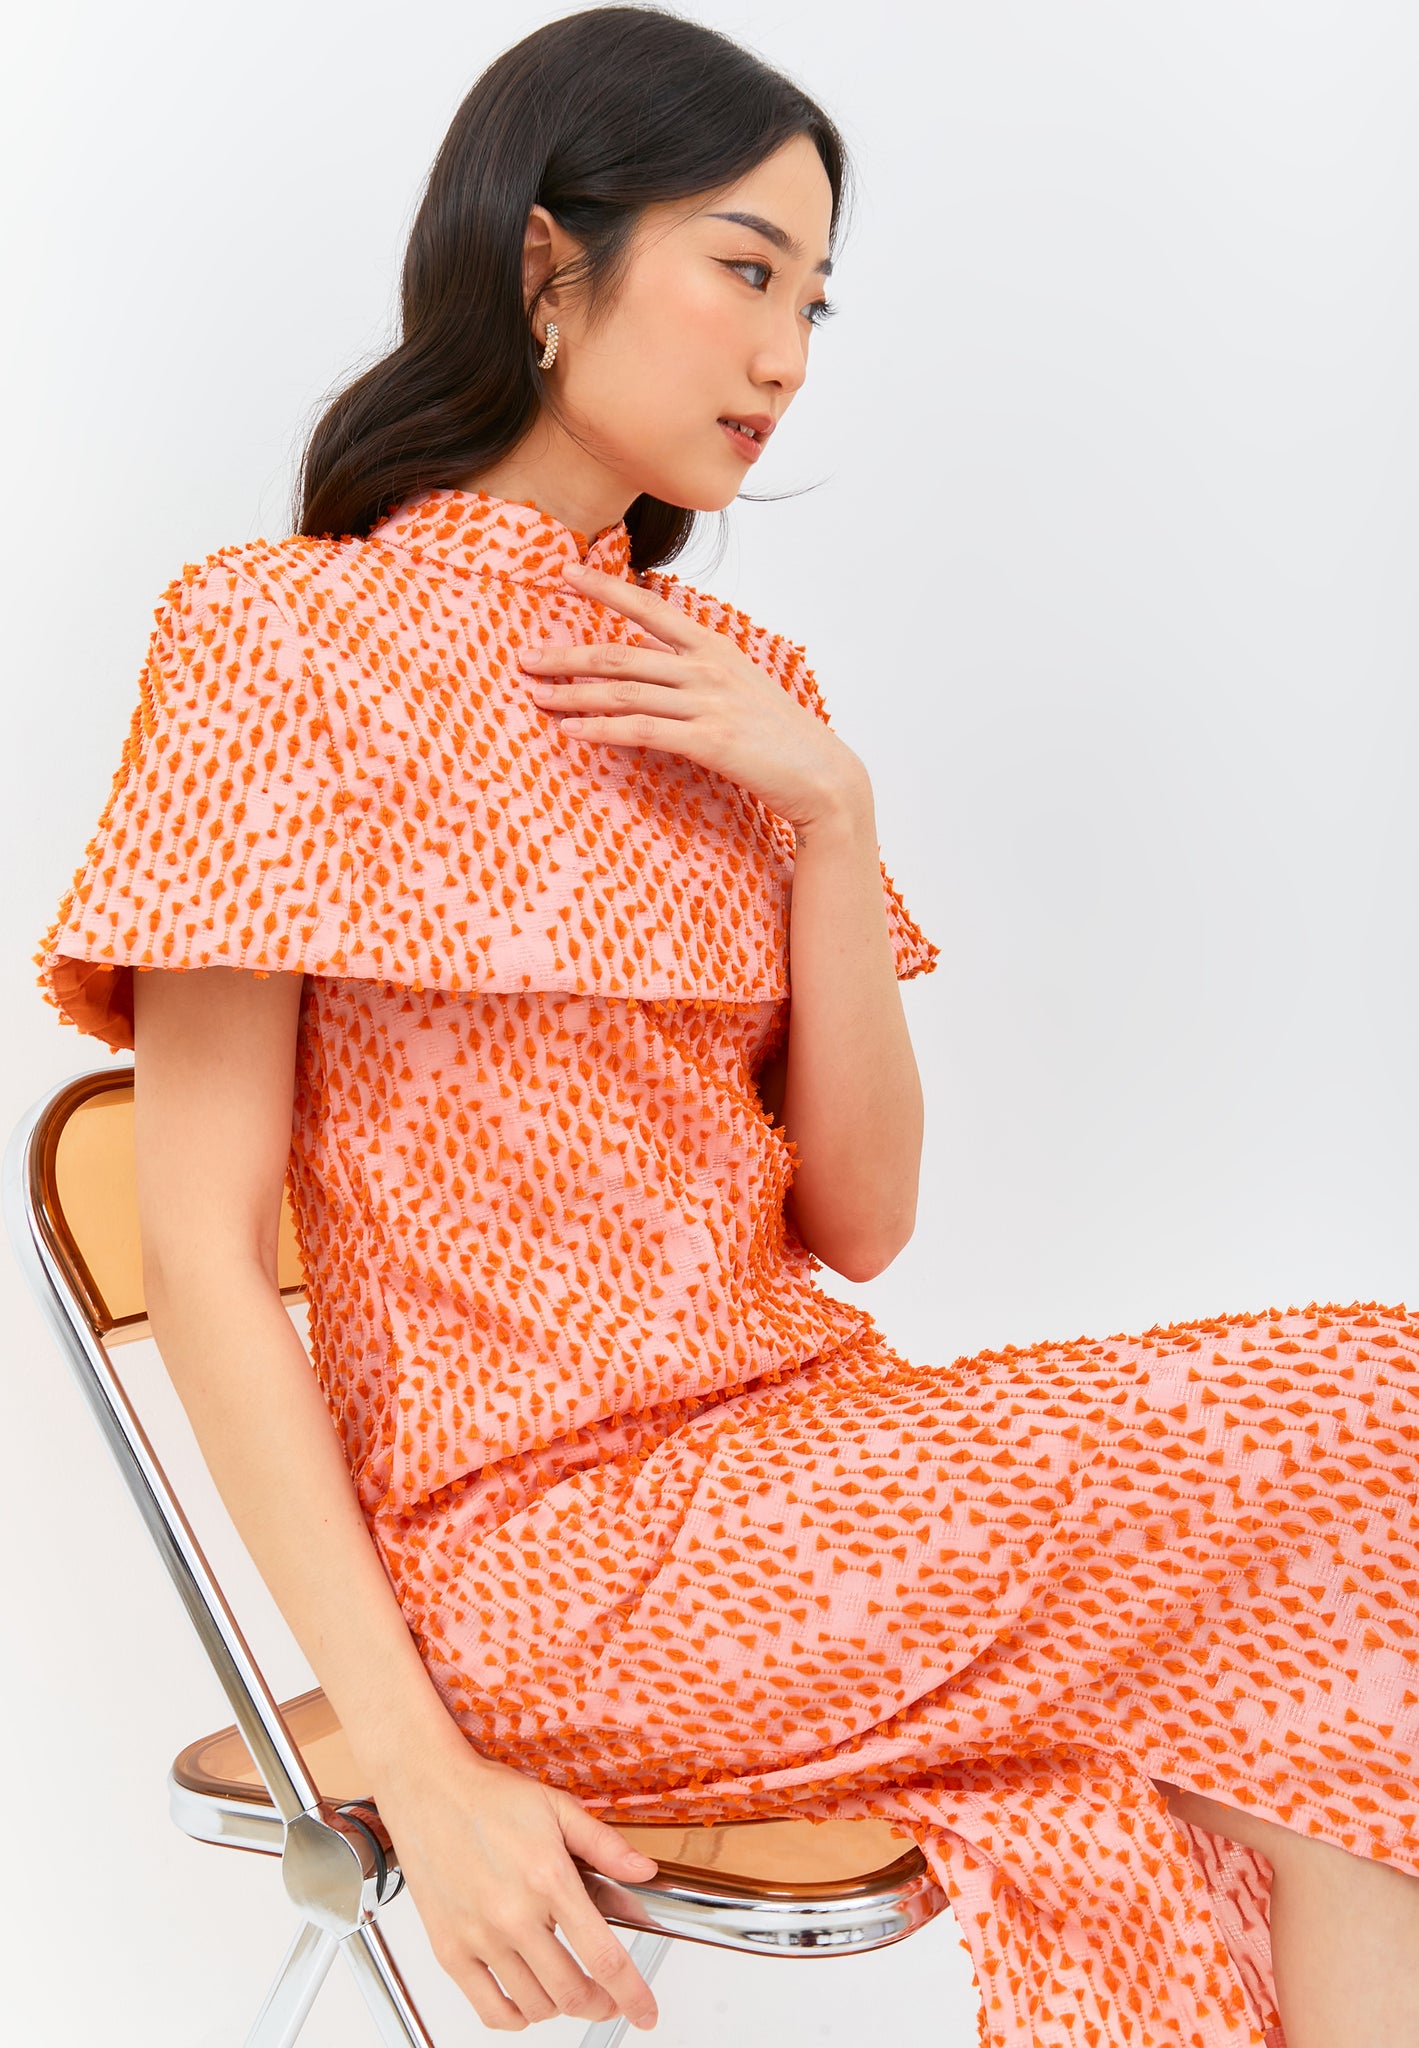 3D Tenun Orange Cape (dress not included)